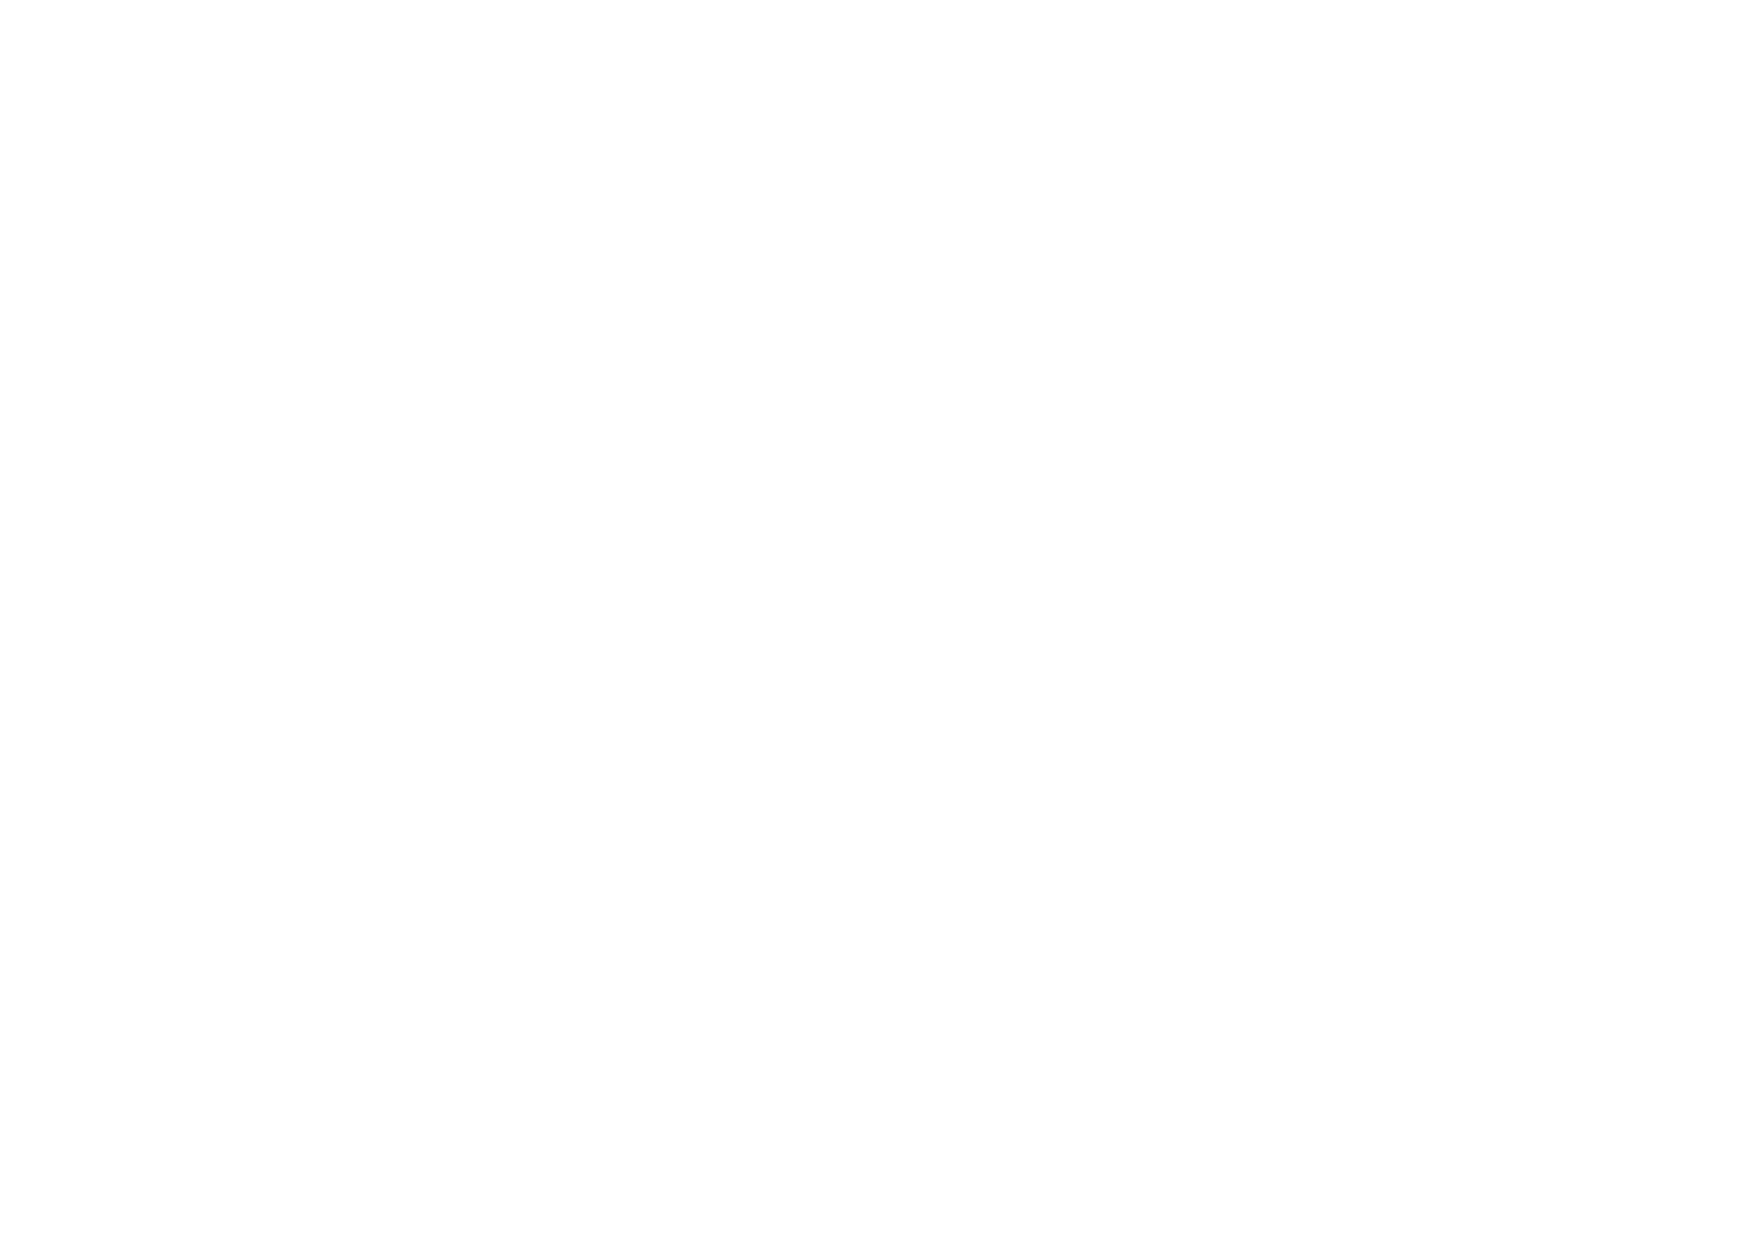 Petit Lys